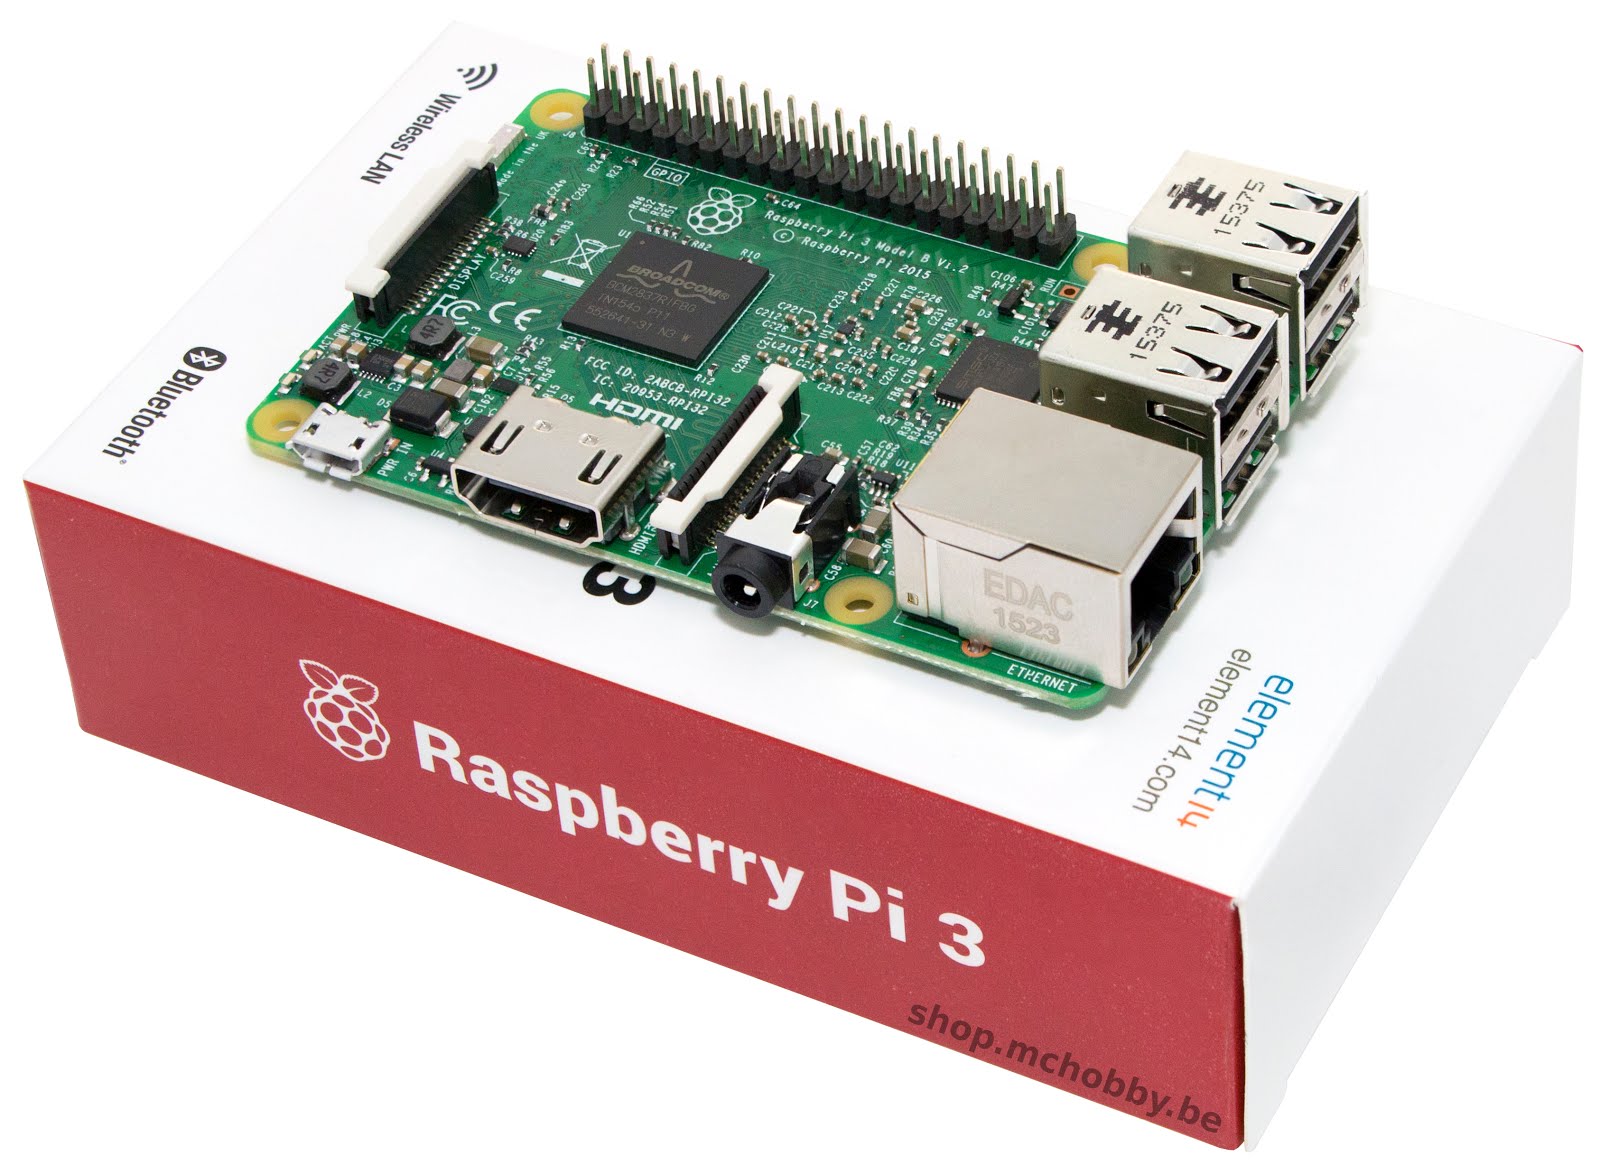 Découverte du Raspberry Pi 4 – arduiblog